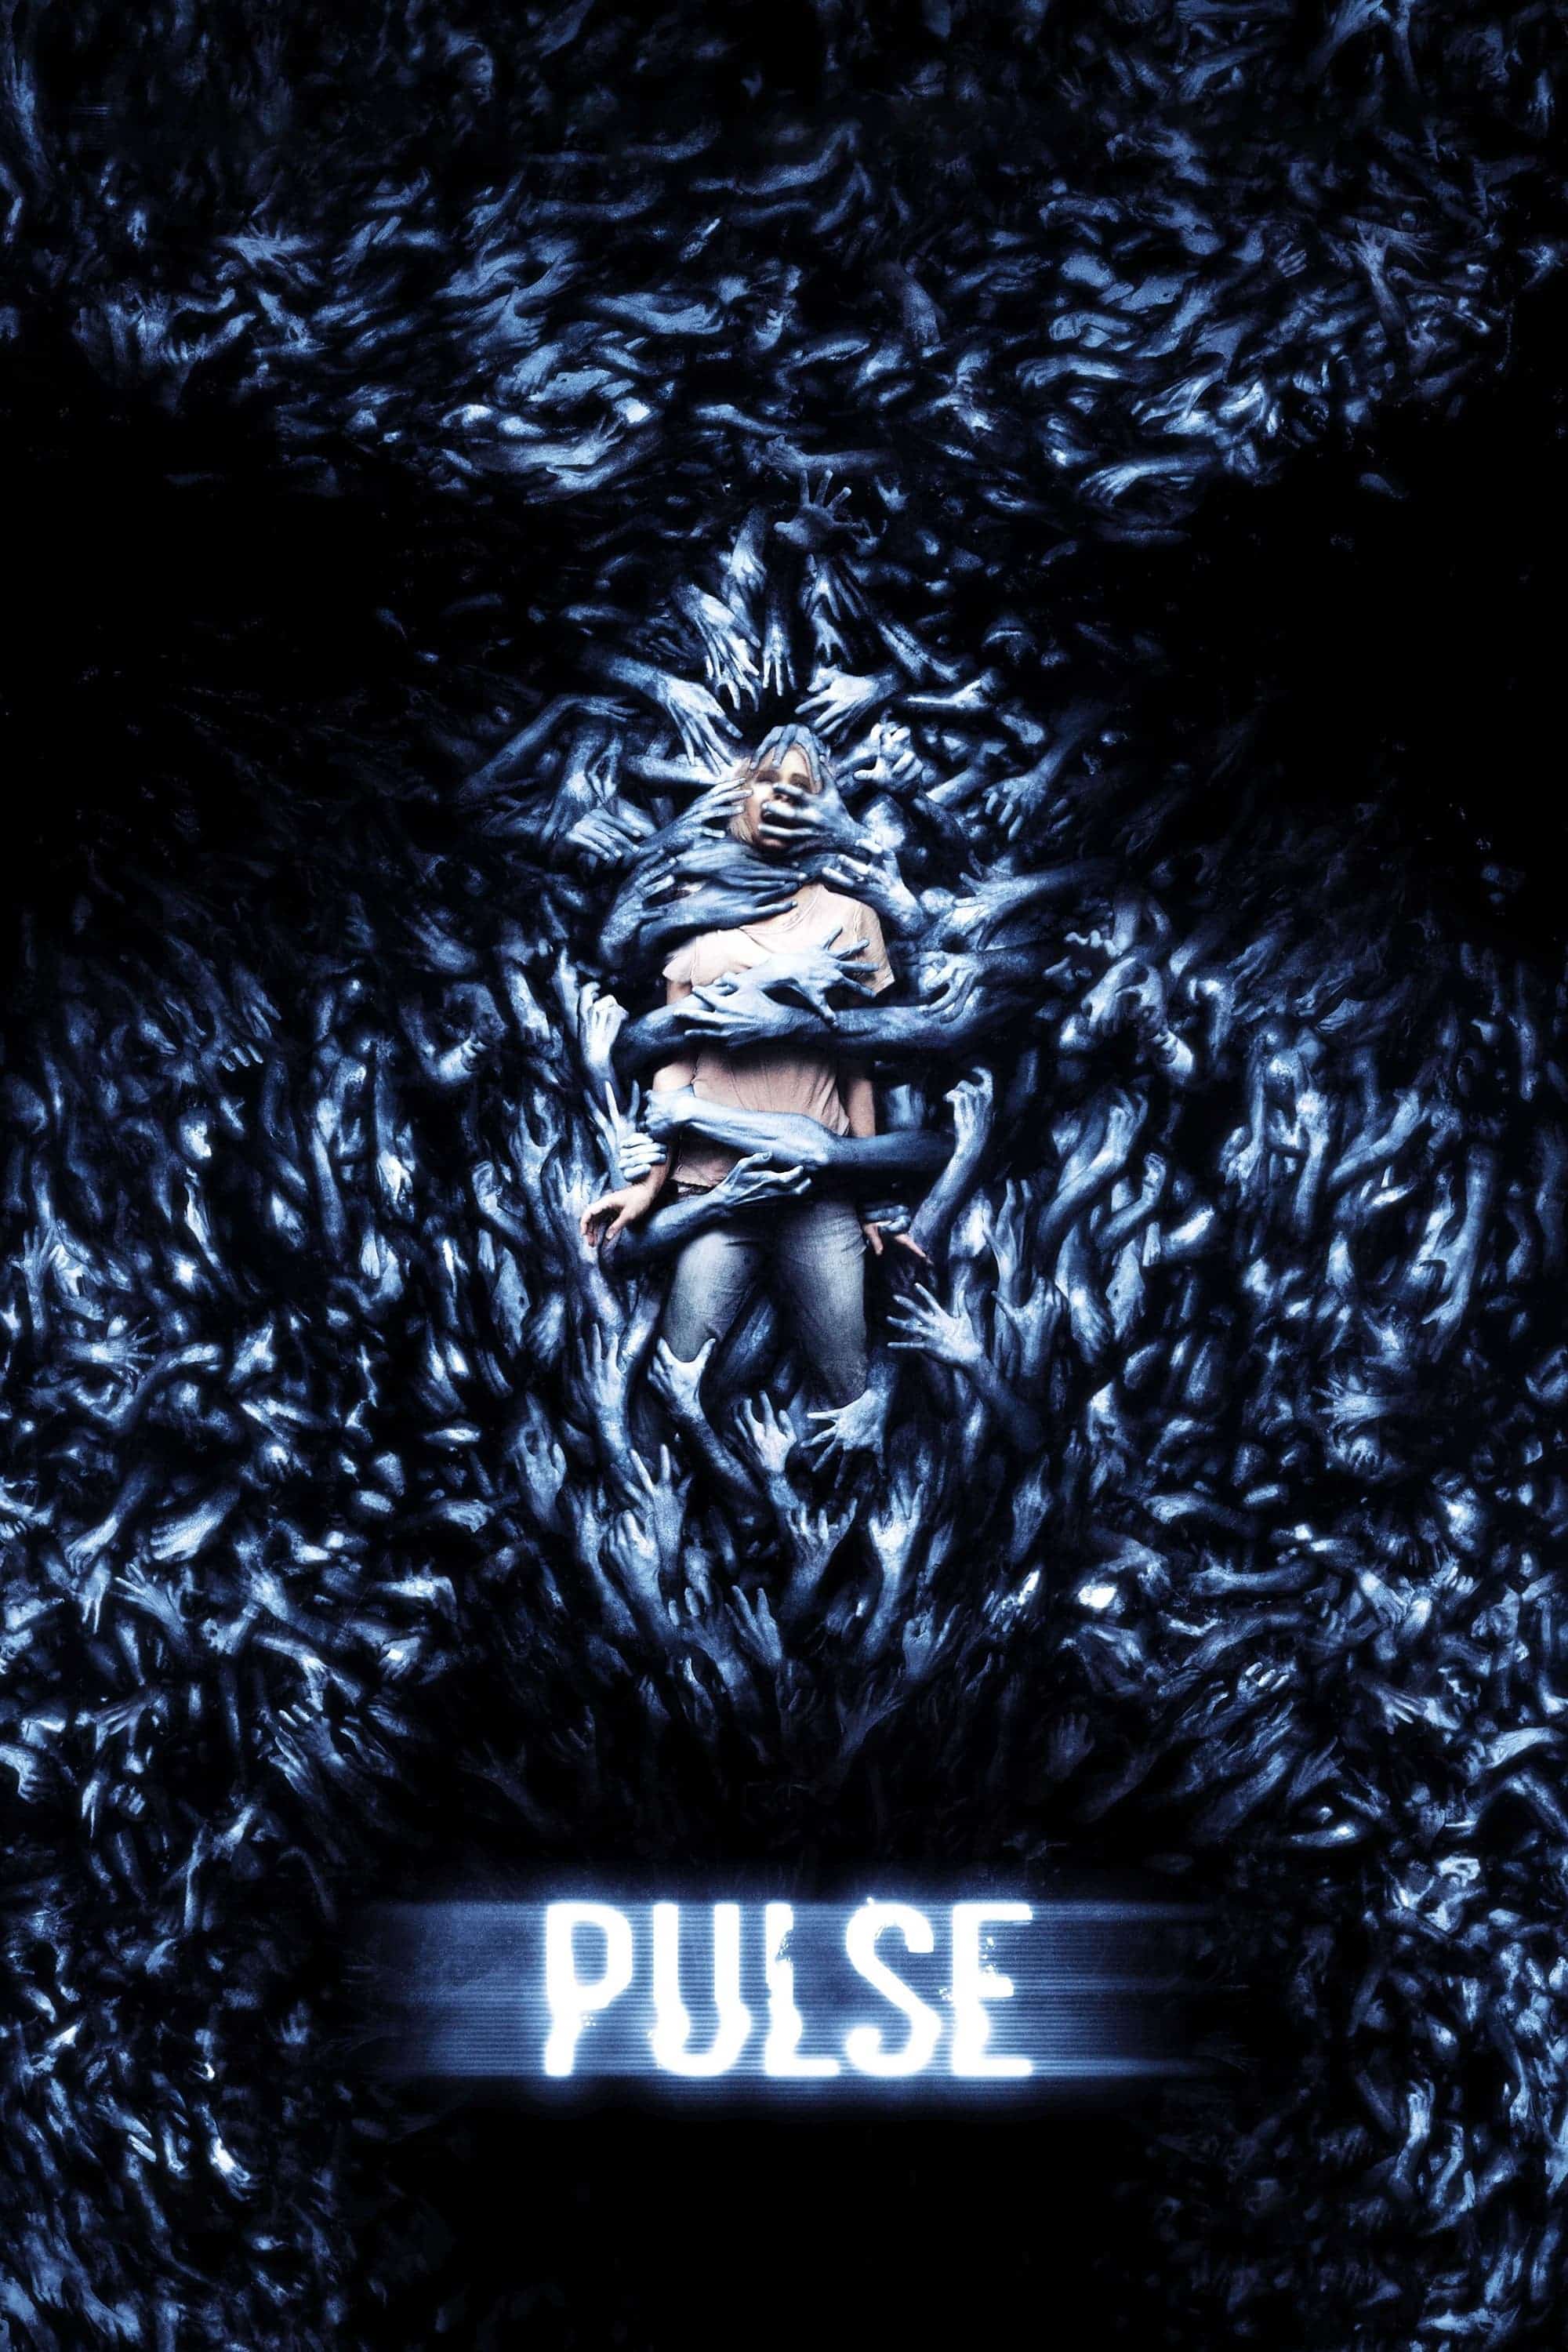 Pulse (2006)